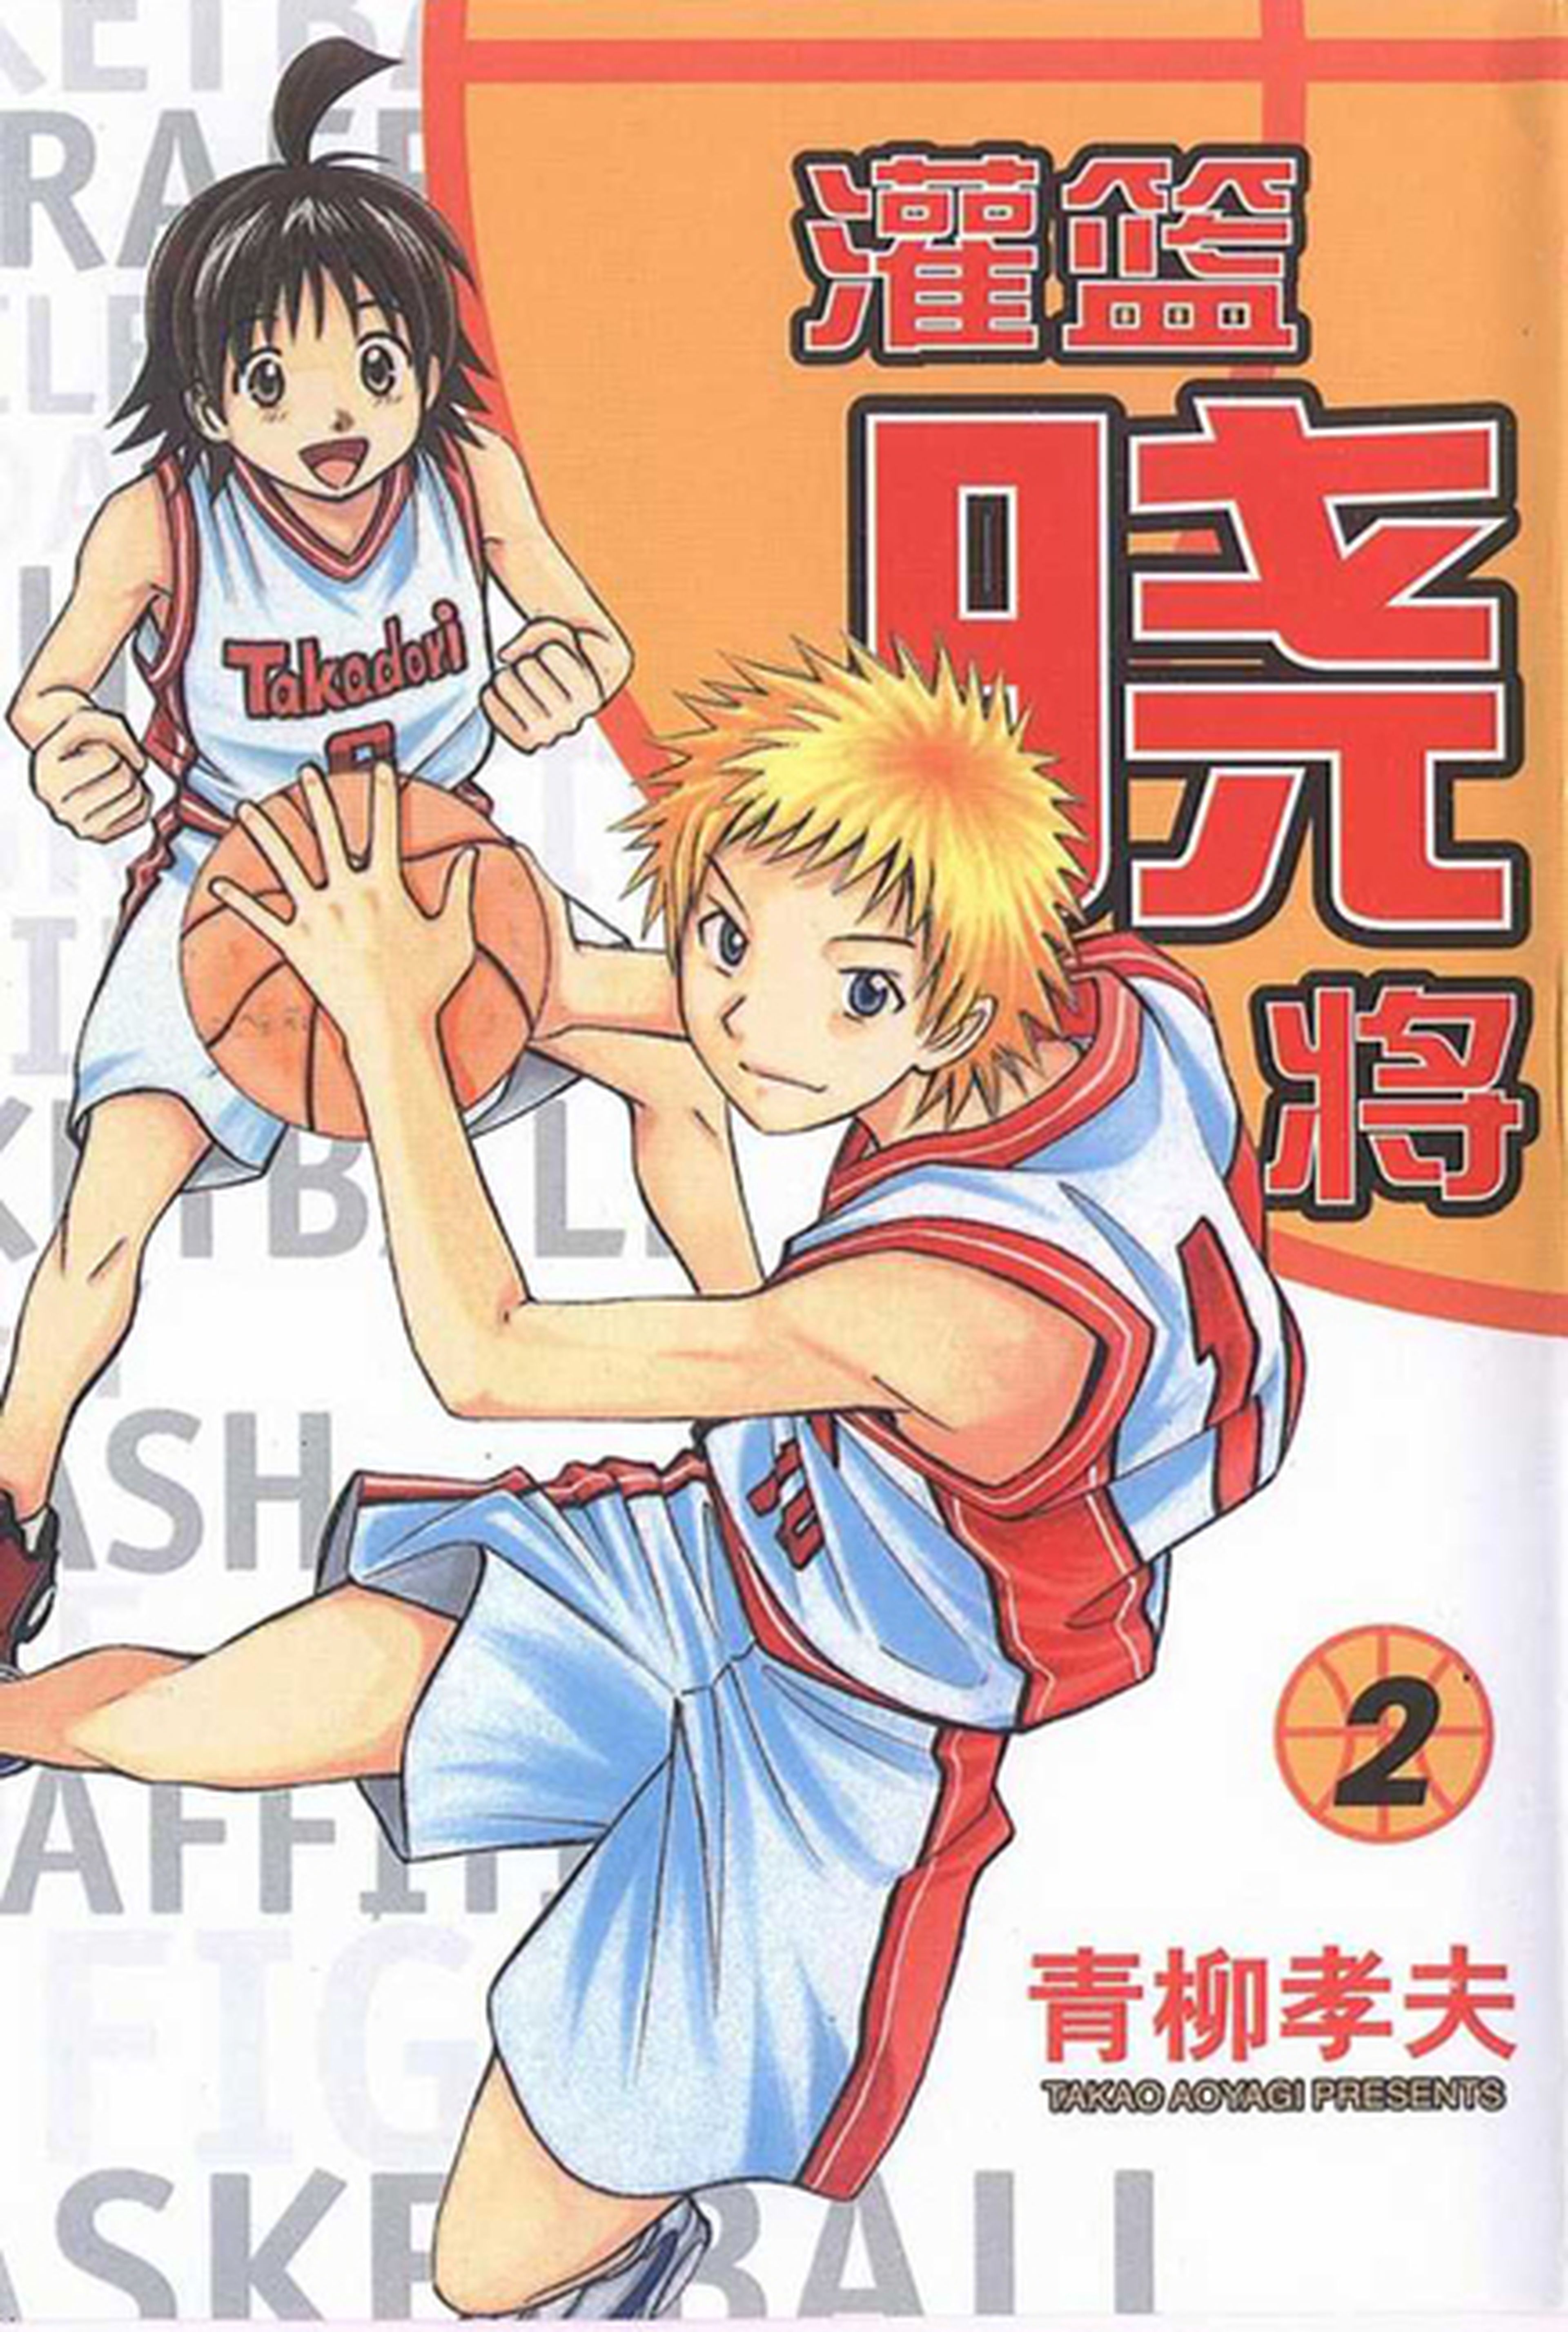 Manga: Las mejores series de baloncesto